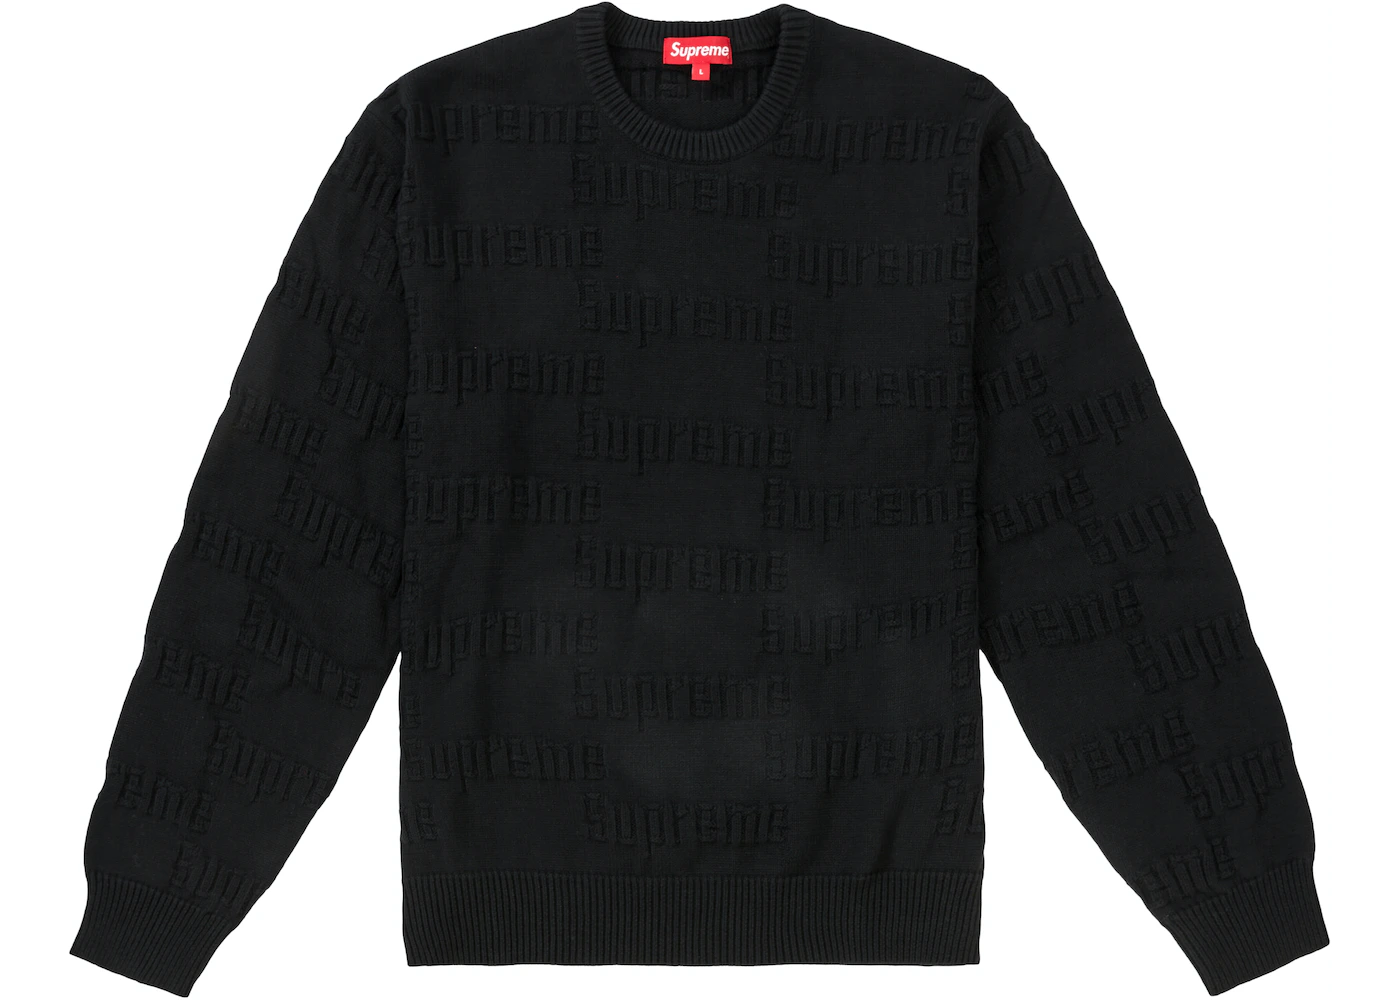 Supreme Raised Logo Sweater Black Men's - FW19 - US